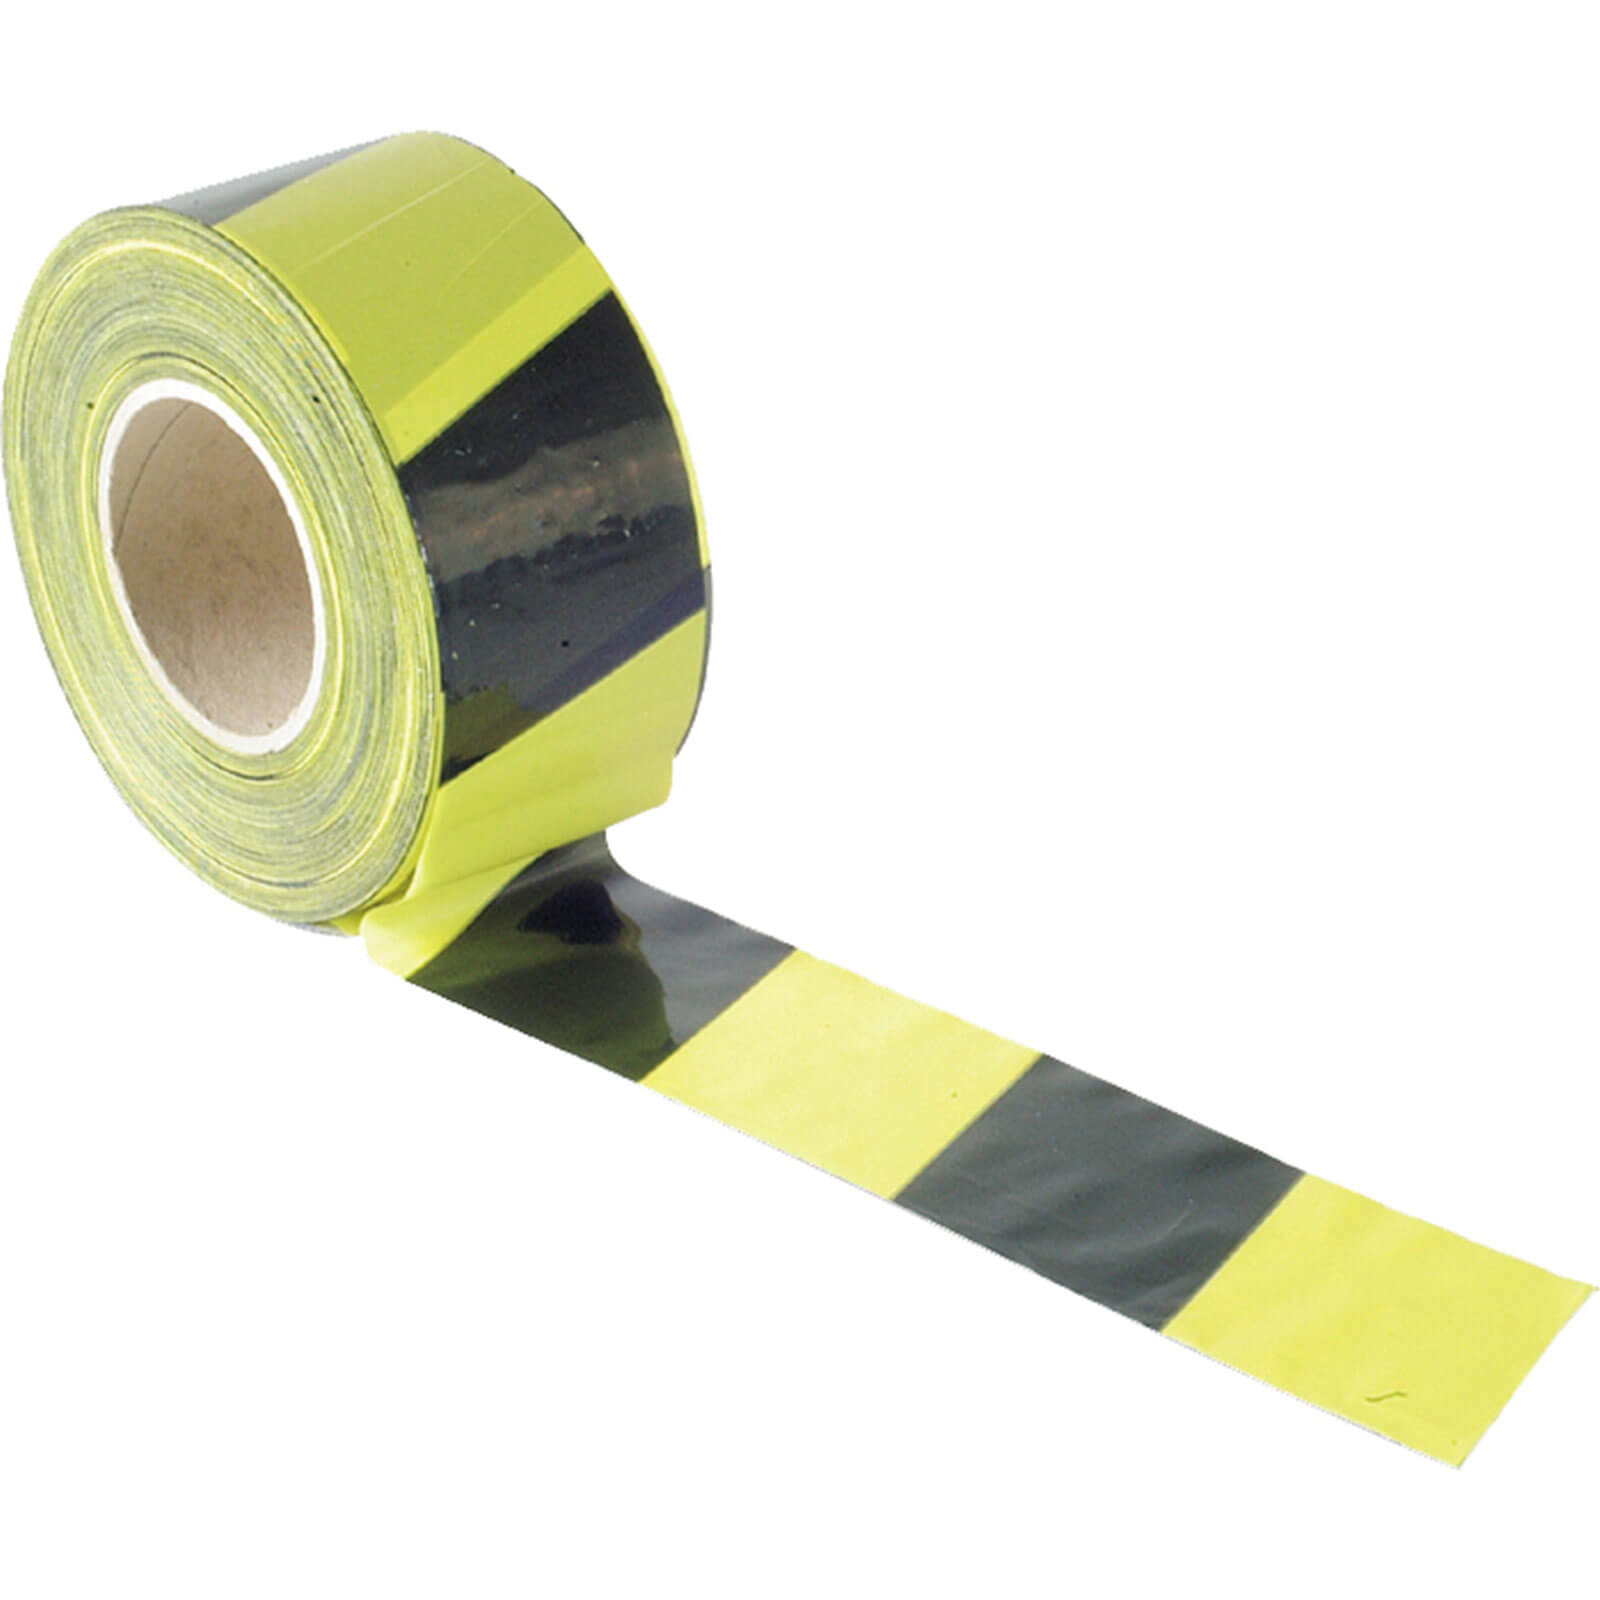 Image of Sirius Adhesive Hazard Warning Tape Black / Yellow 50mm 33m